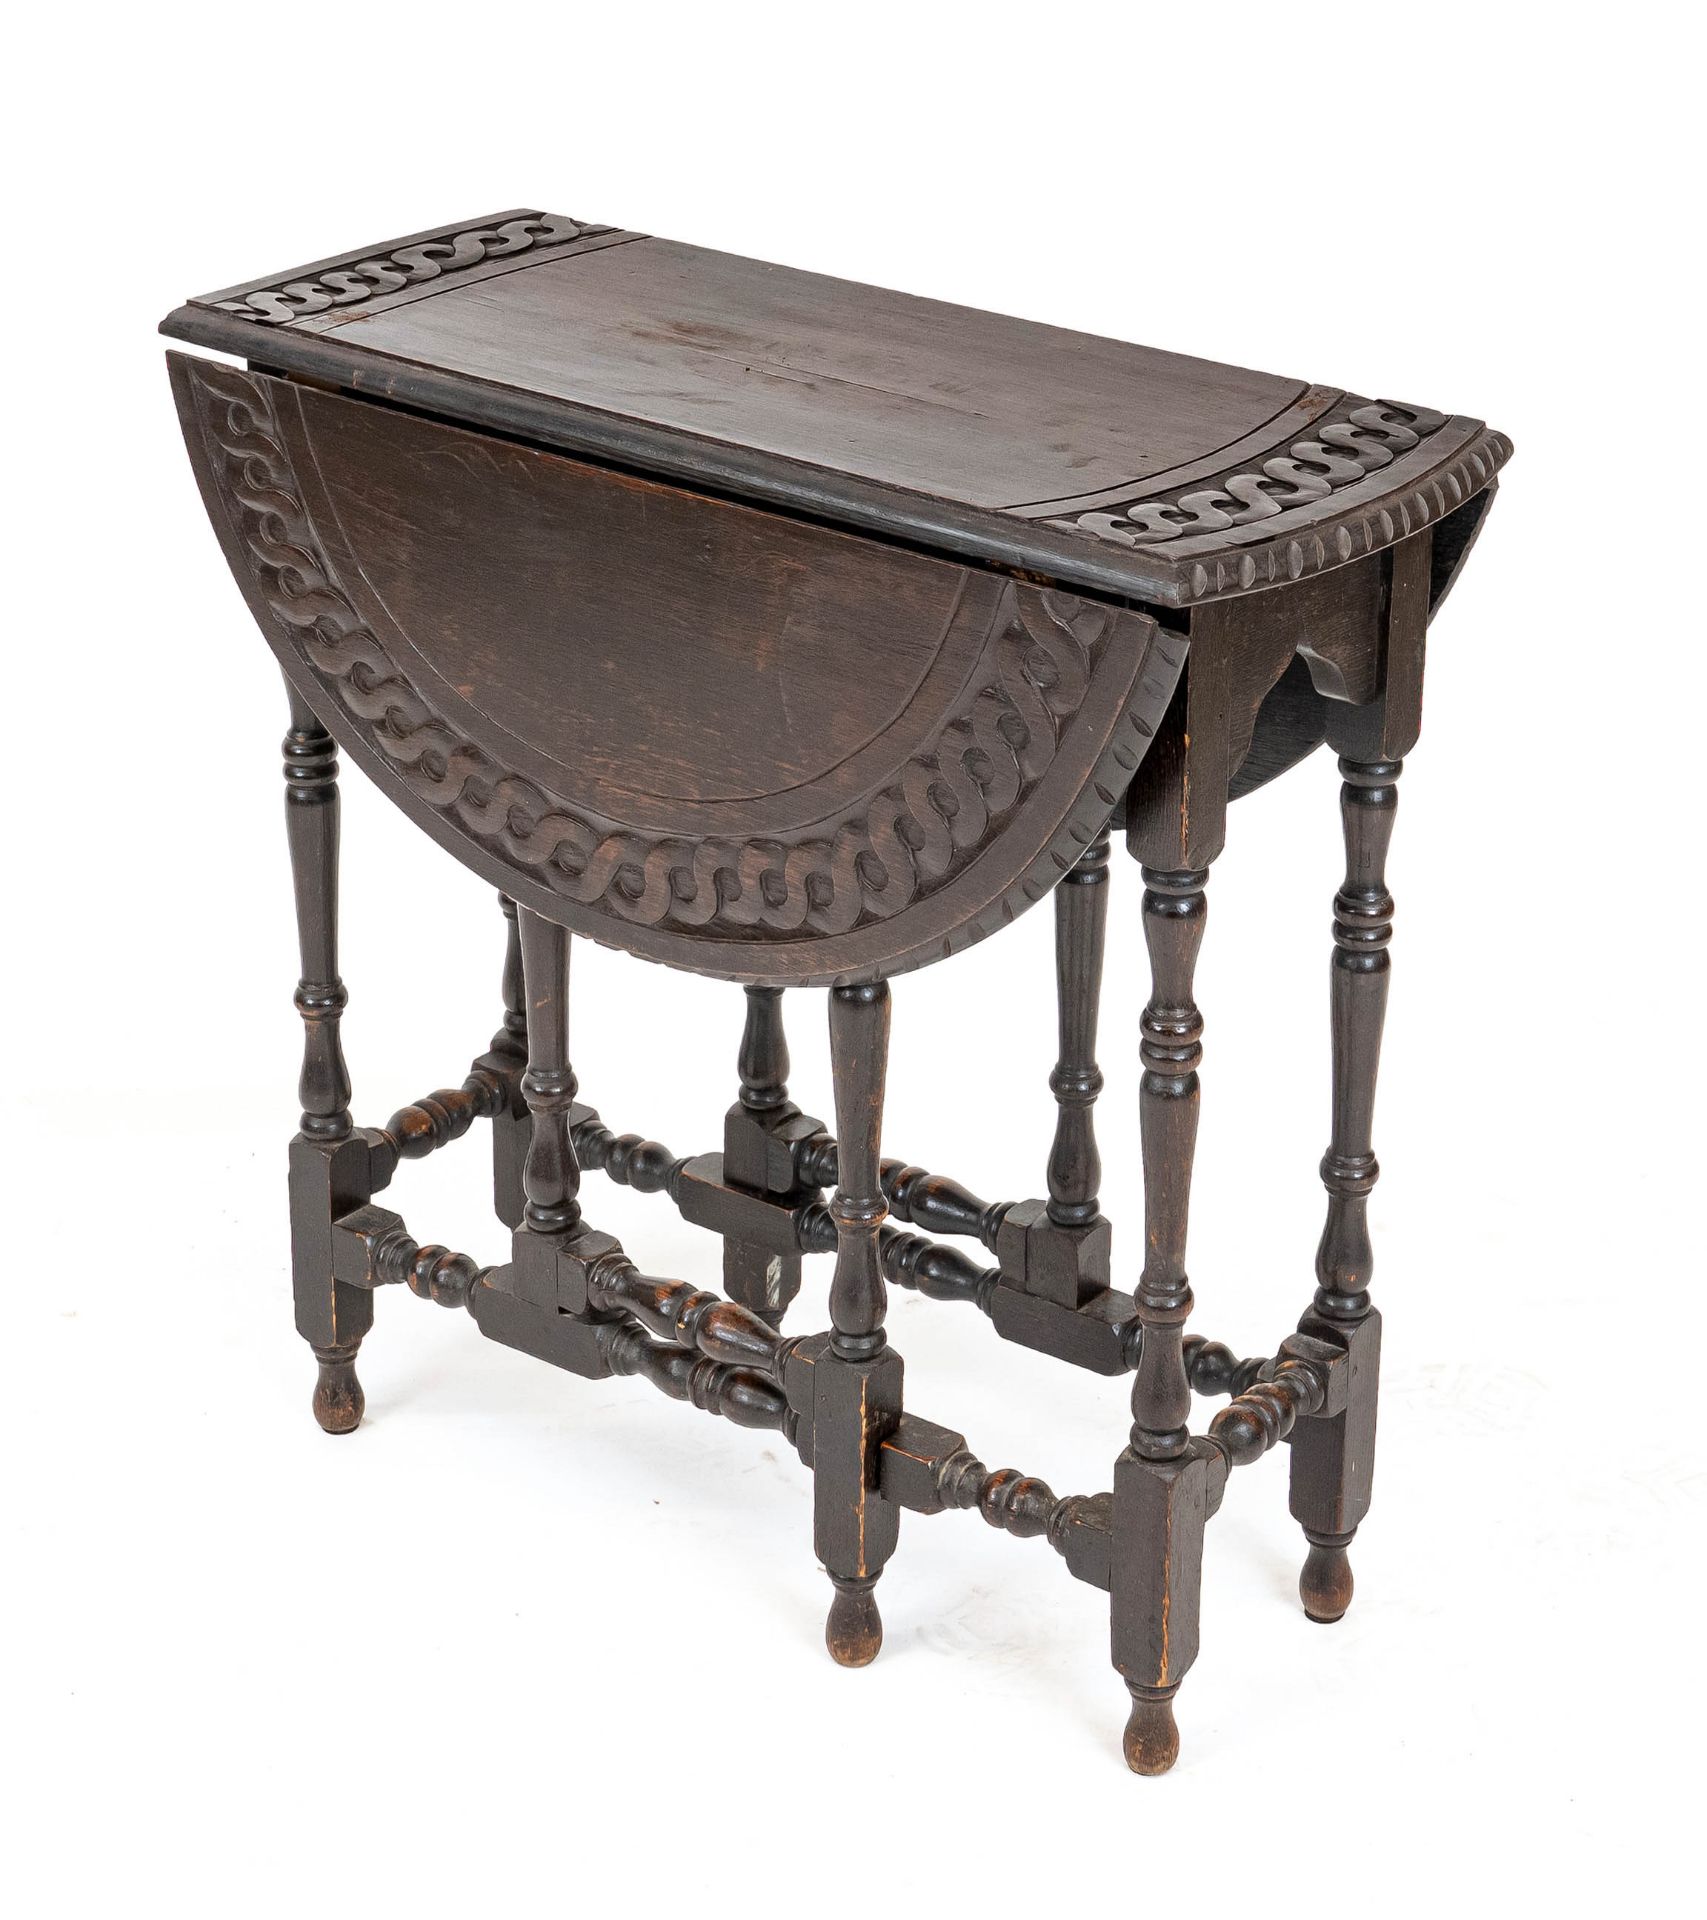 Folding table, c. 1880, oak, frame folding to the side, 68 x 69 x 30, d. 69 cm. - Image 2 of 2